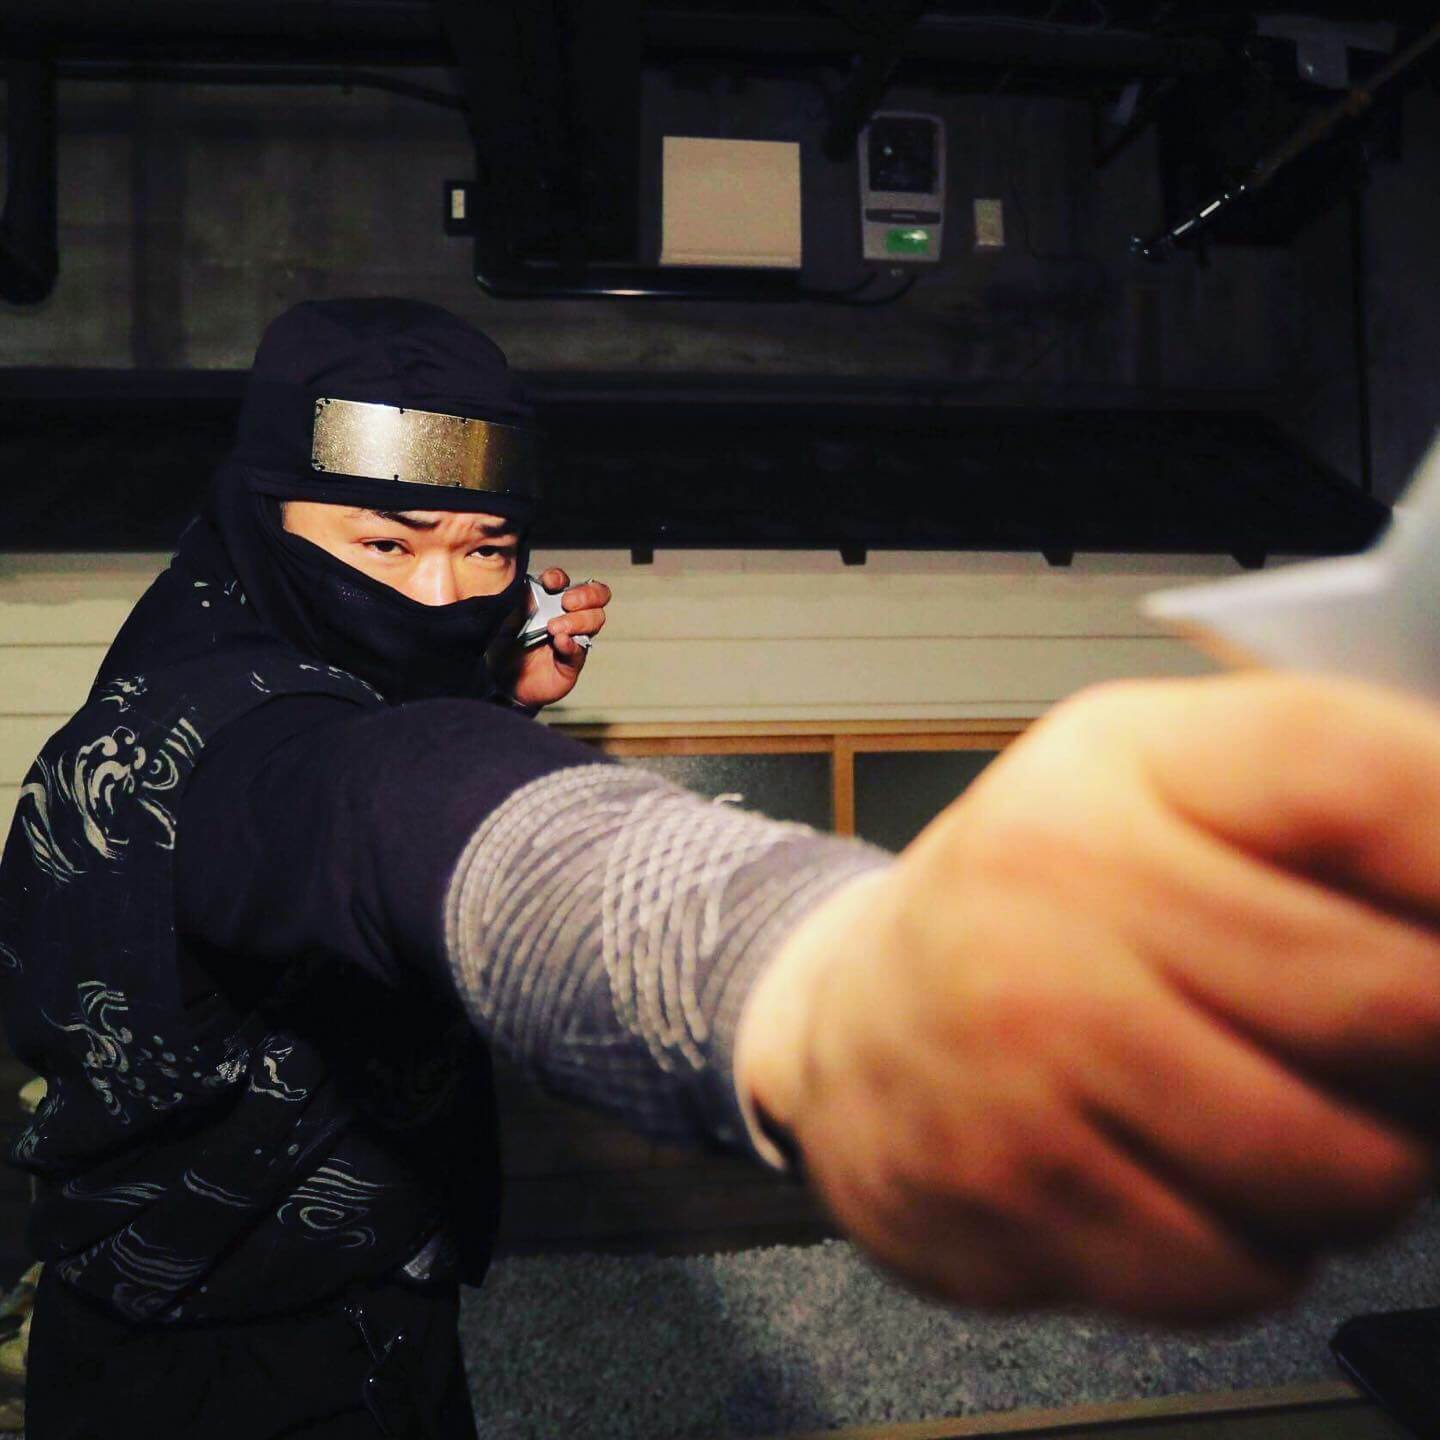 Train Like a Real Ninja at the Hokkaido Ninja Do!